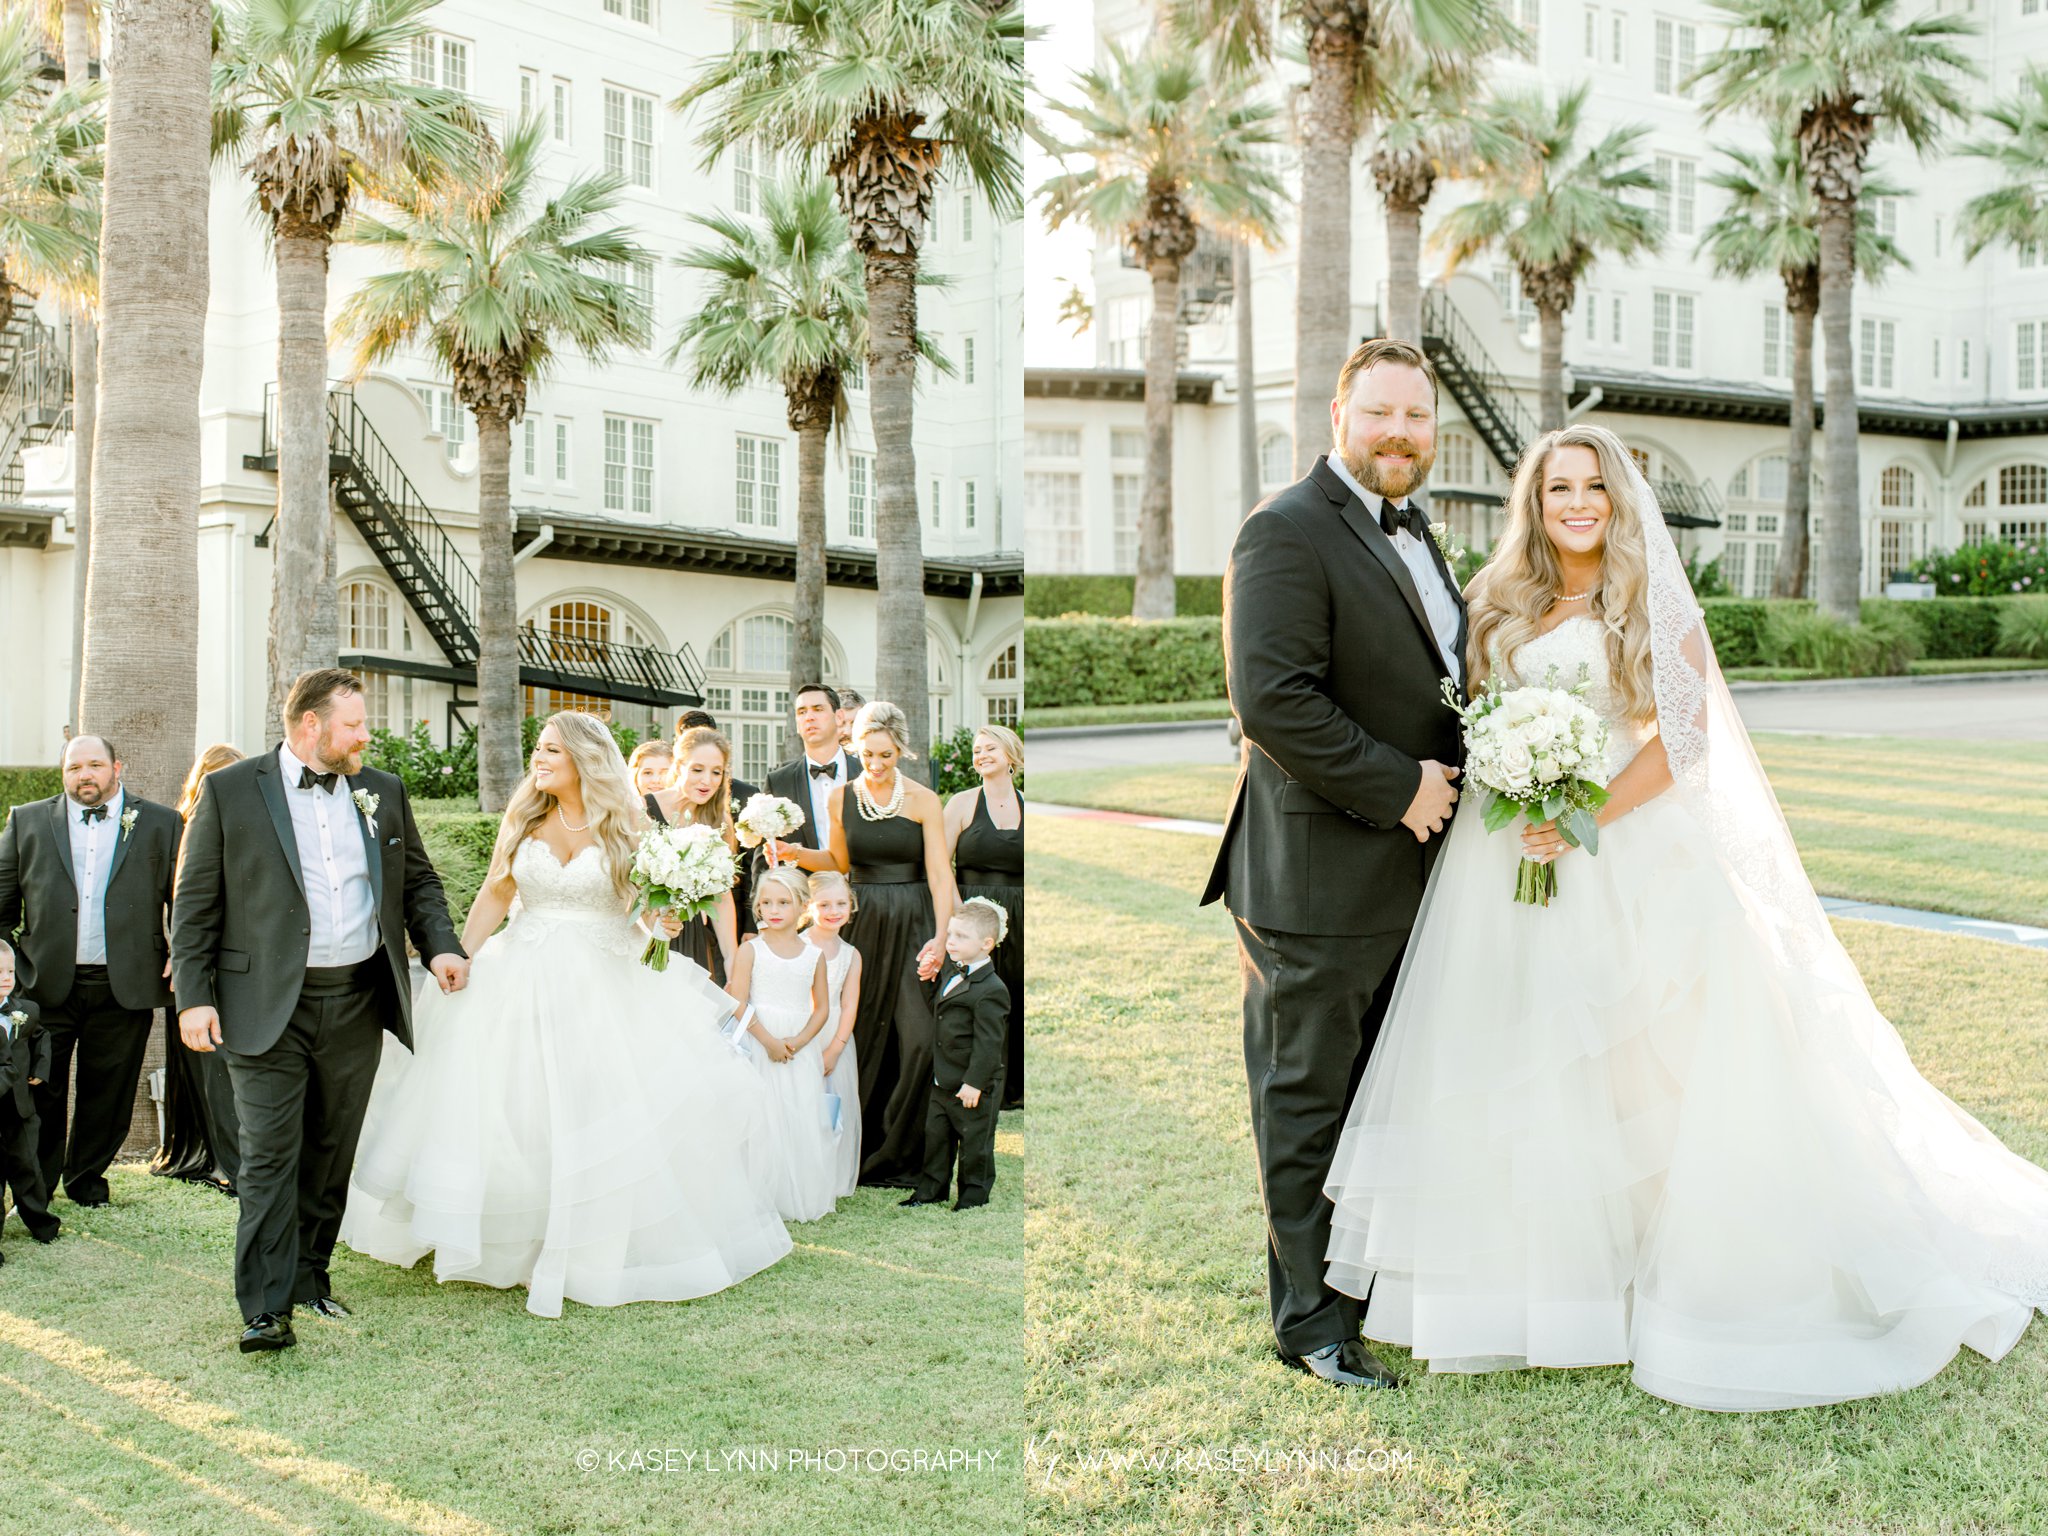 Hotel Galvez Wedding Photographer / Kasey Lynn Photography